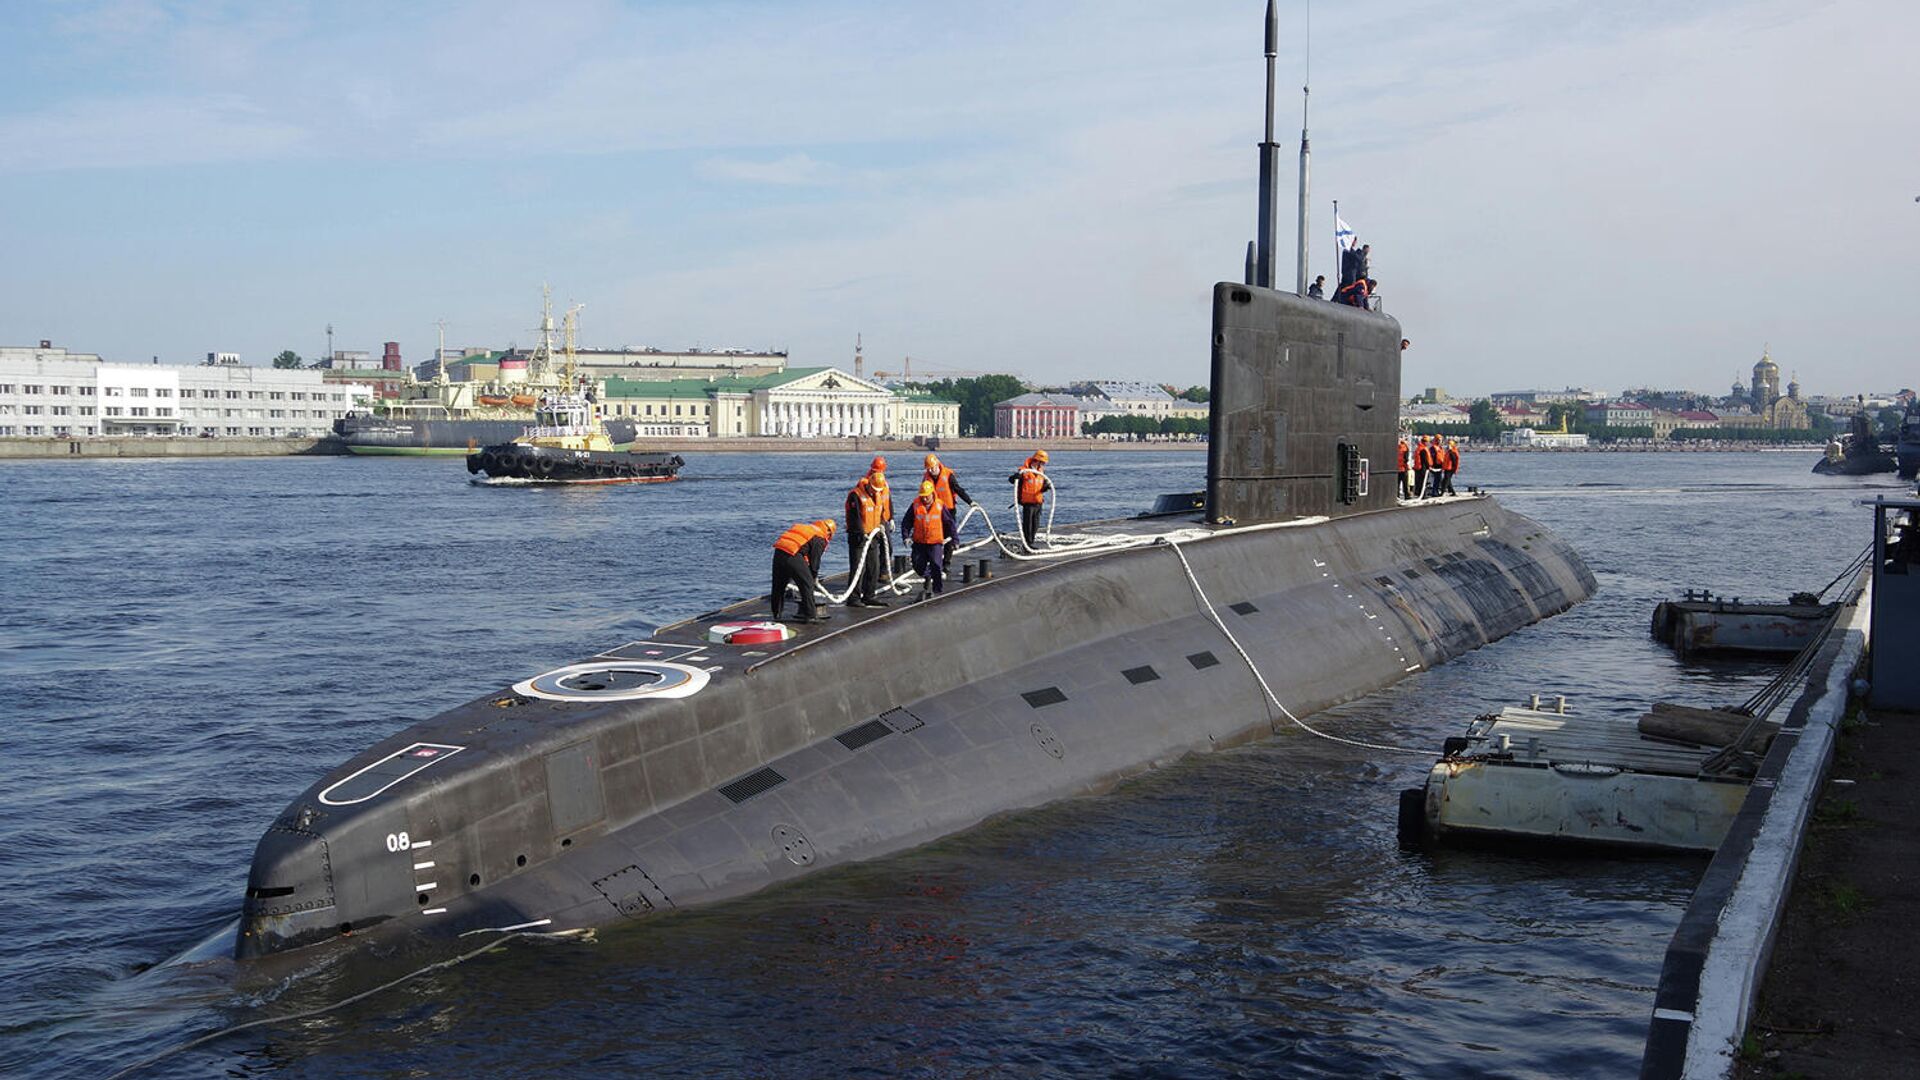 Лодка б н. Адмиралтейские верфи подводная лодка. Подводная лодка проекта 636 3 Волхов. Подводная лодка Колпино. Подводная лодка Волхов 636.